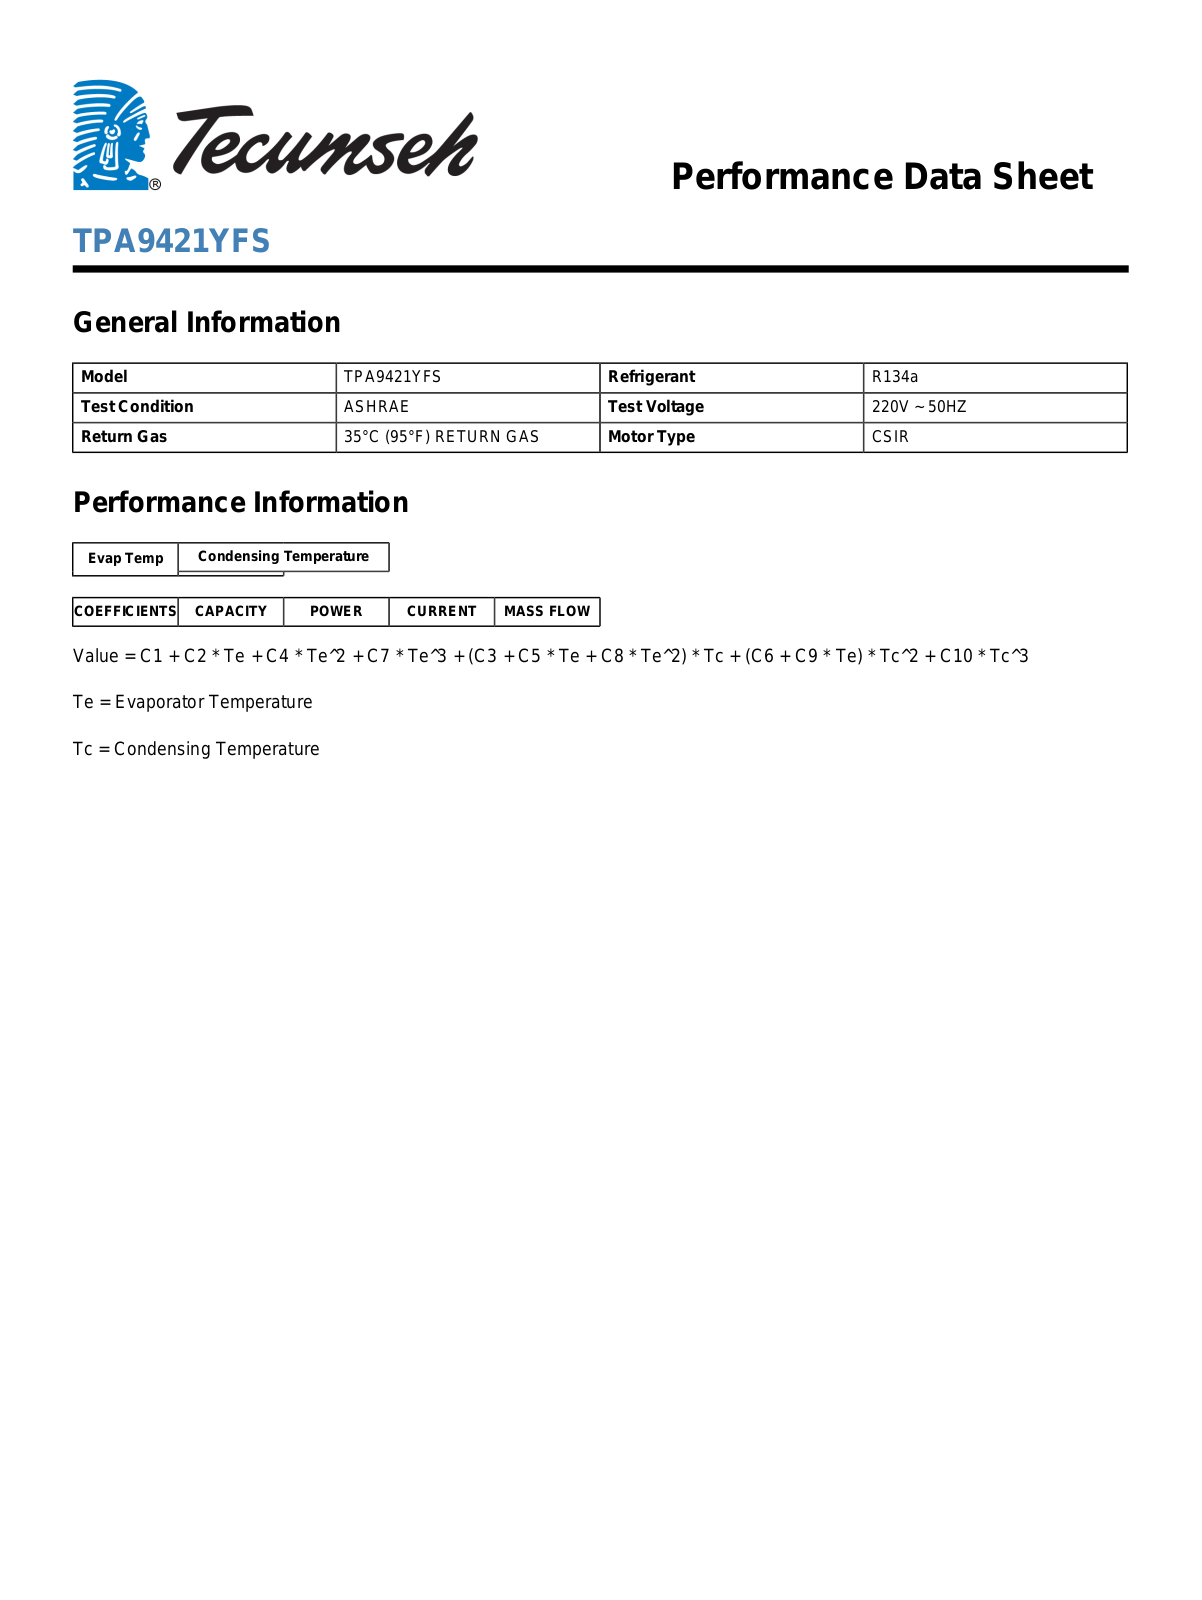 Tecumseh TPA9421YFS Manual